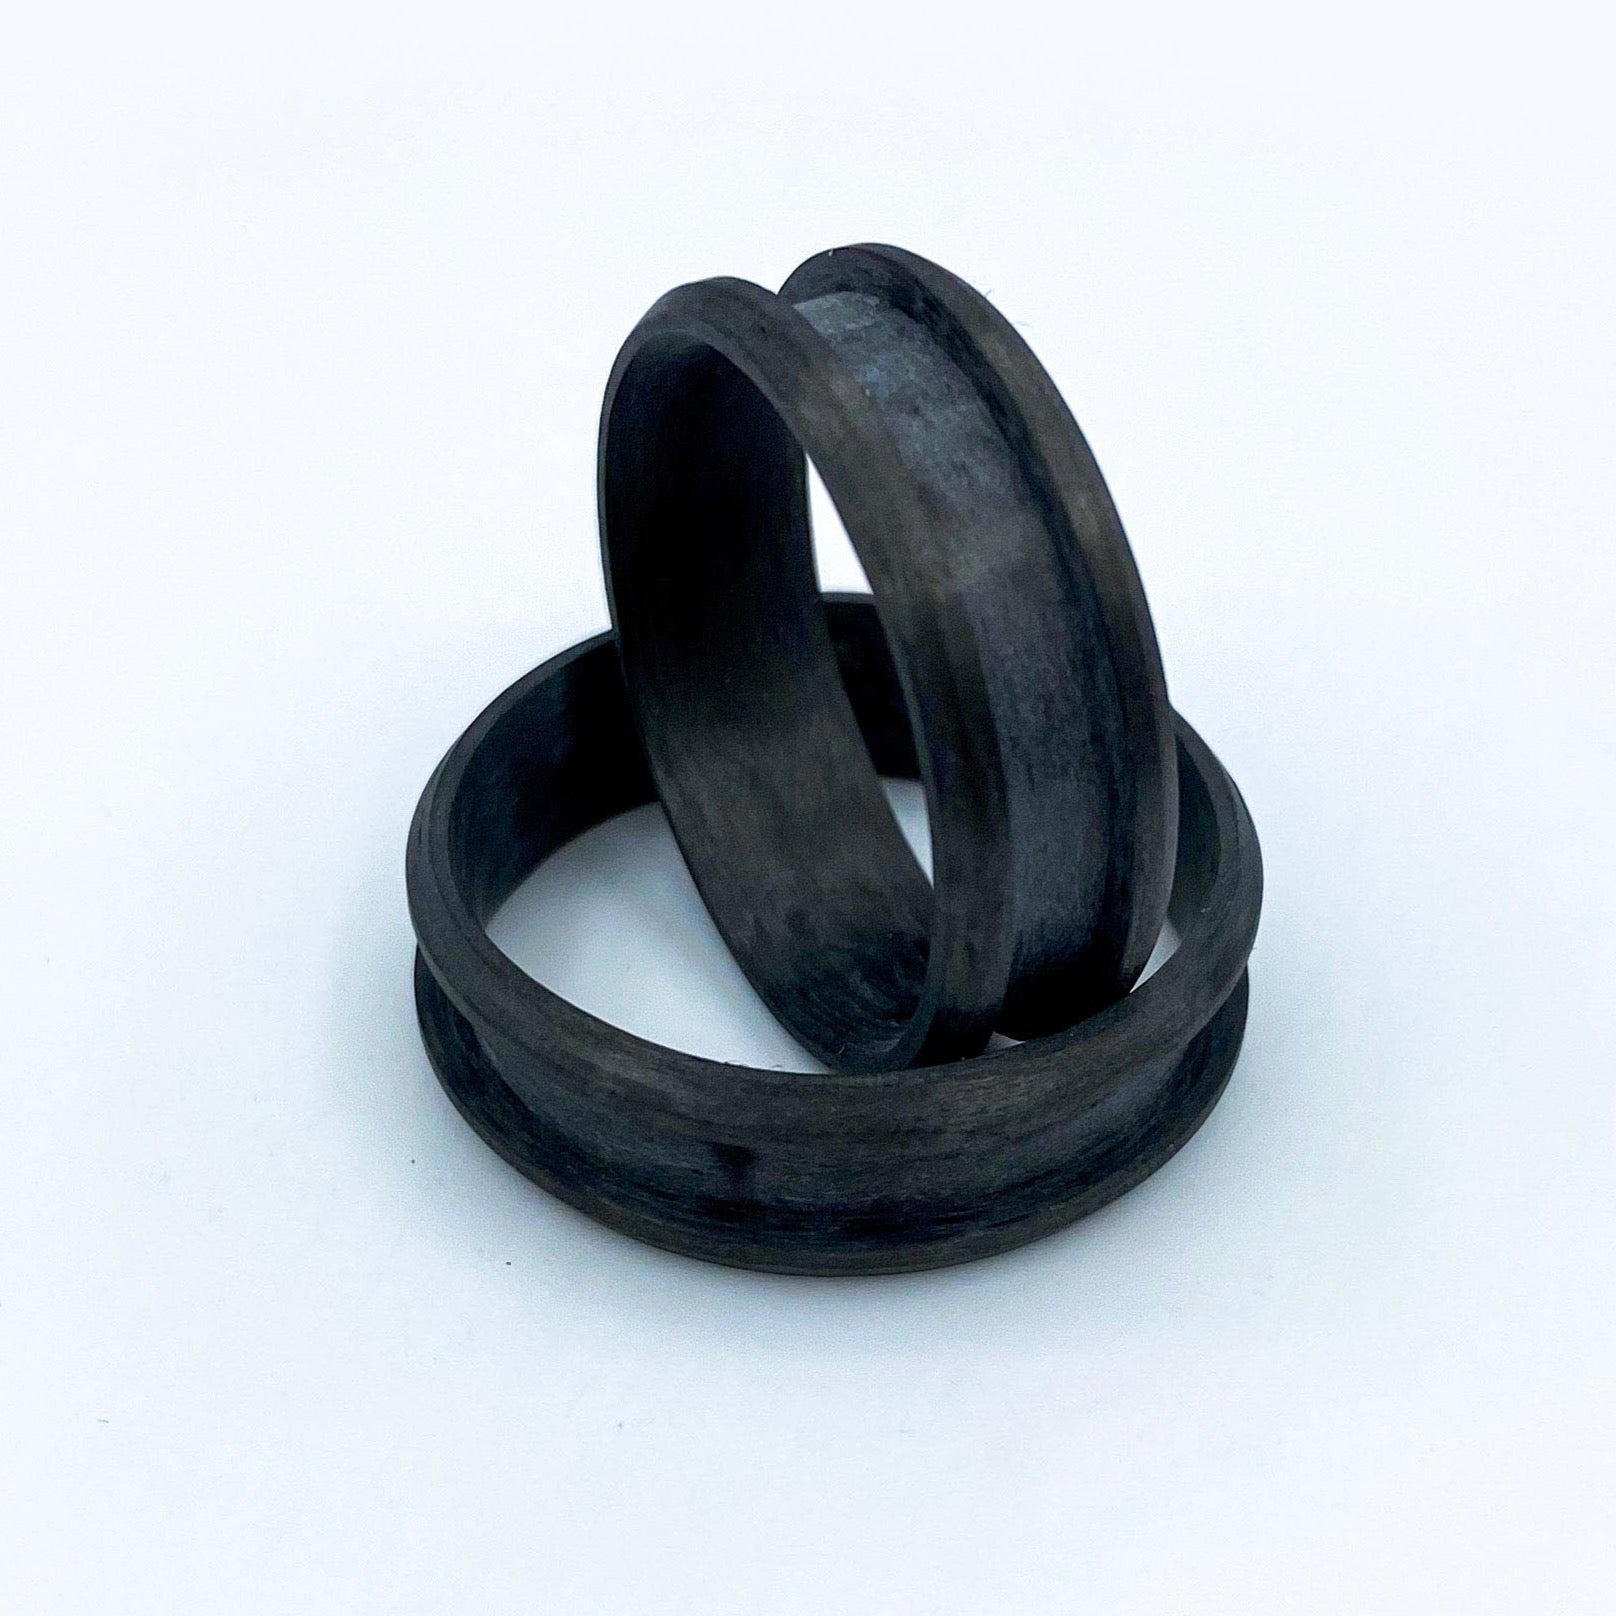 10 Pack - Carbon Fiber Ring Blank - Patrick Adair Supplies